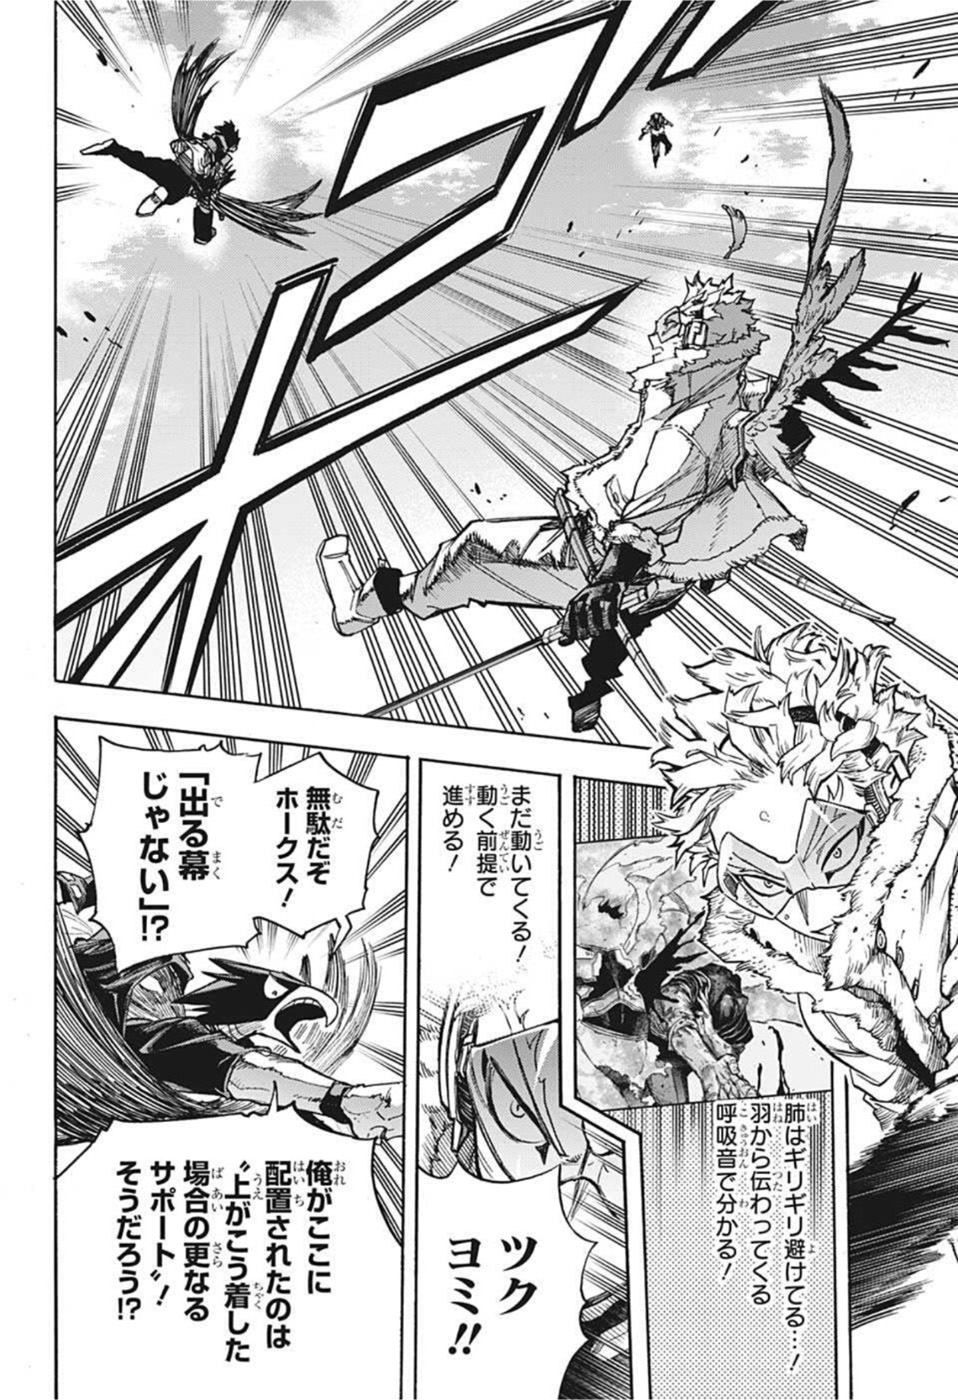 Boku no Hero Academia - Chapter 355 - Page 2